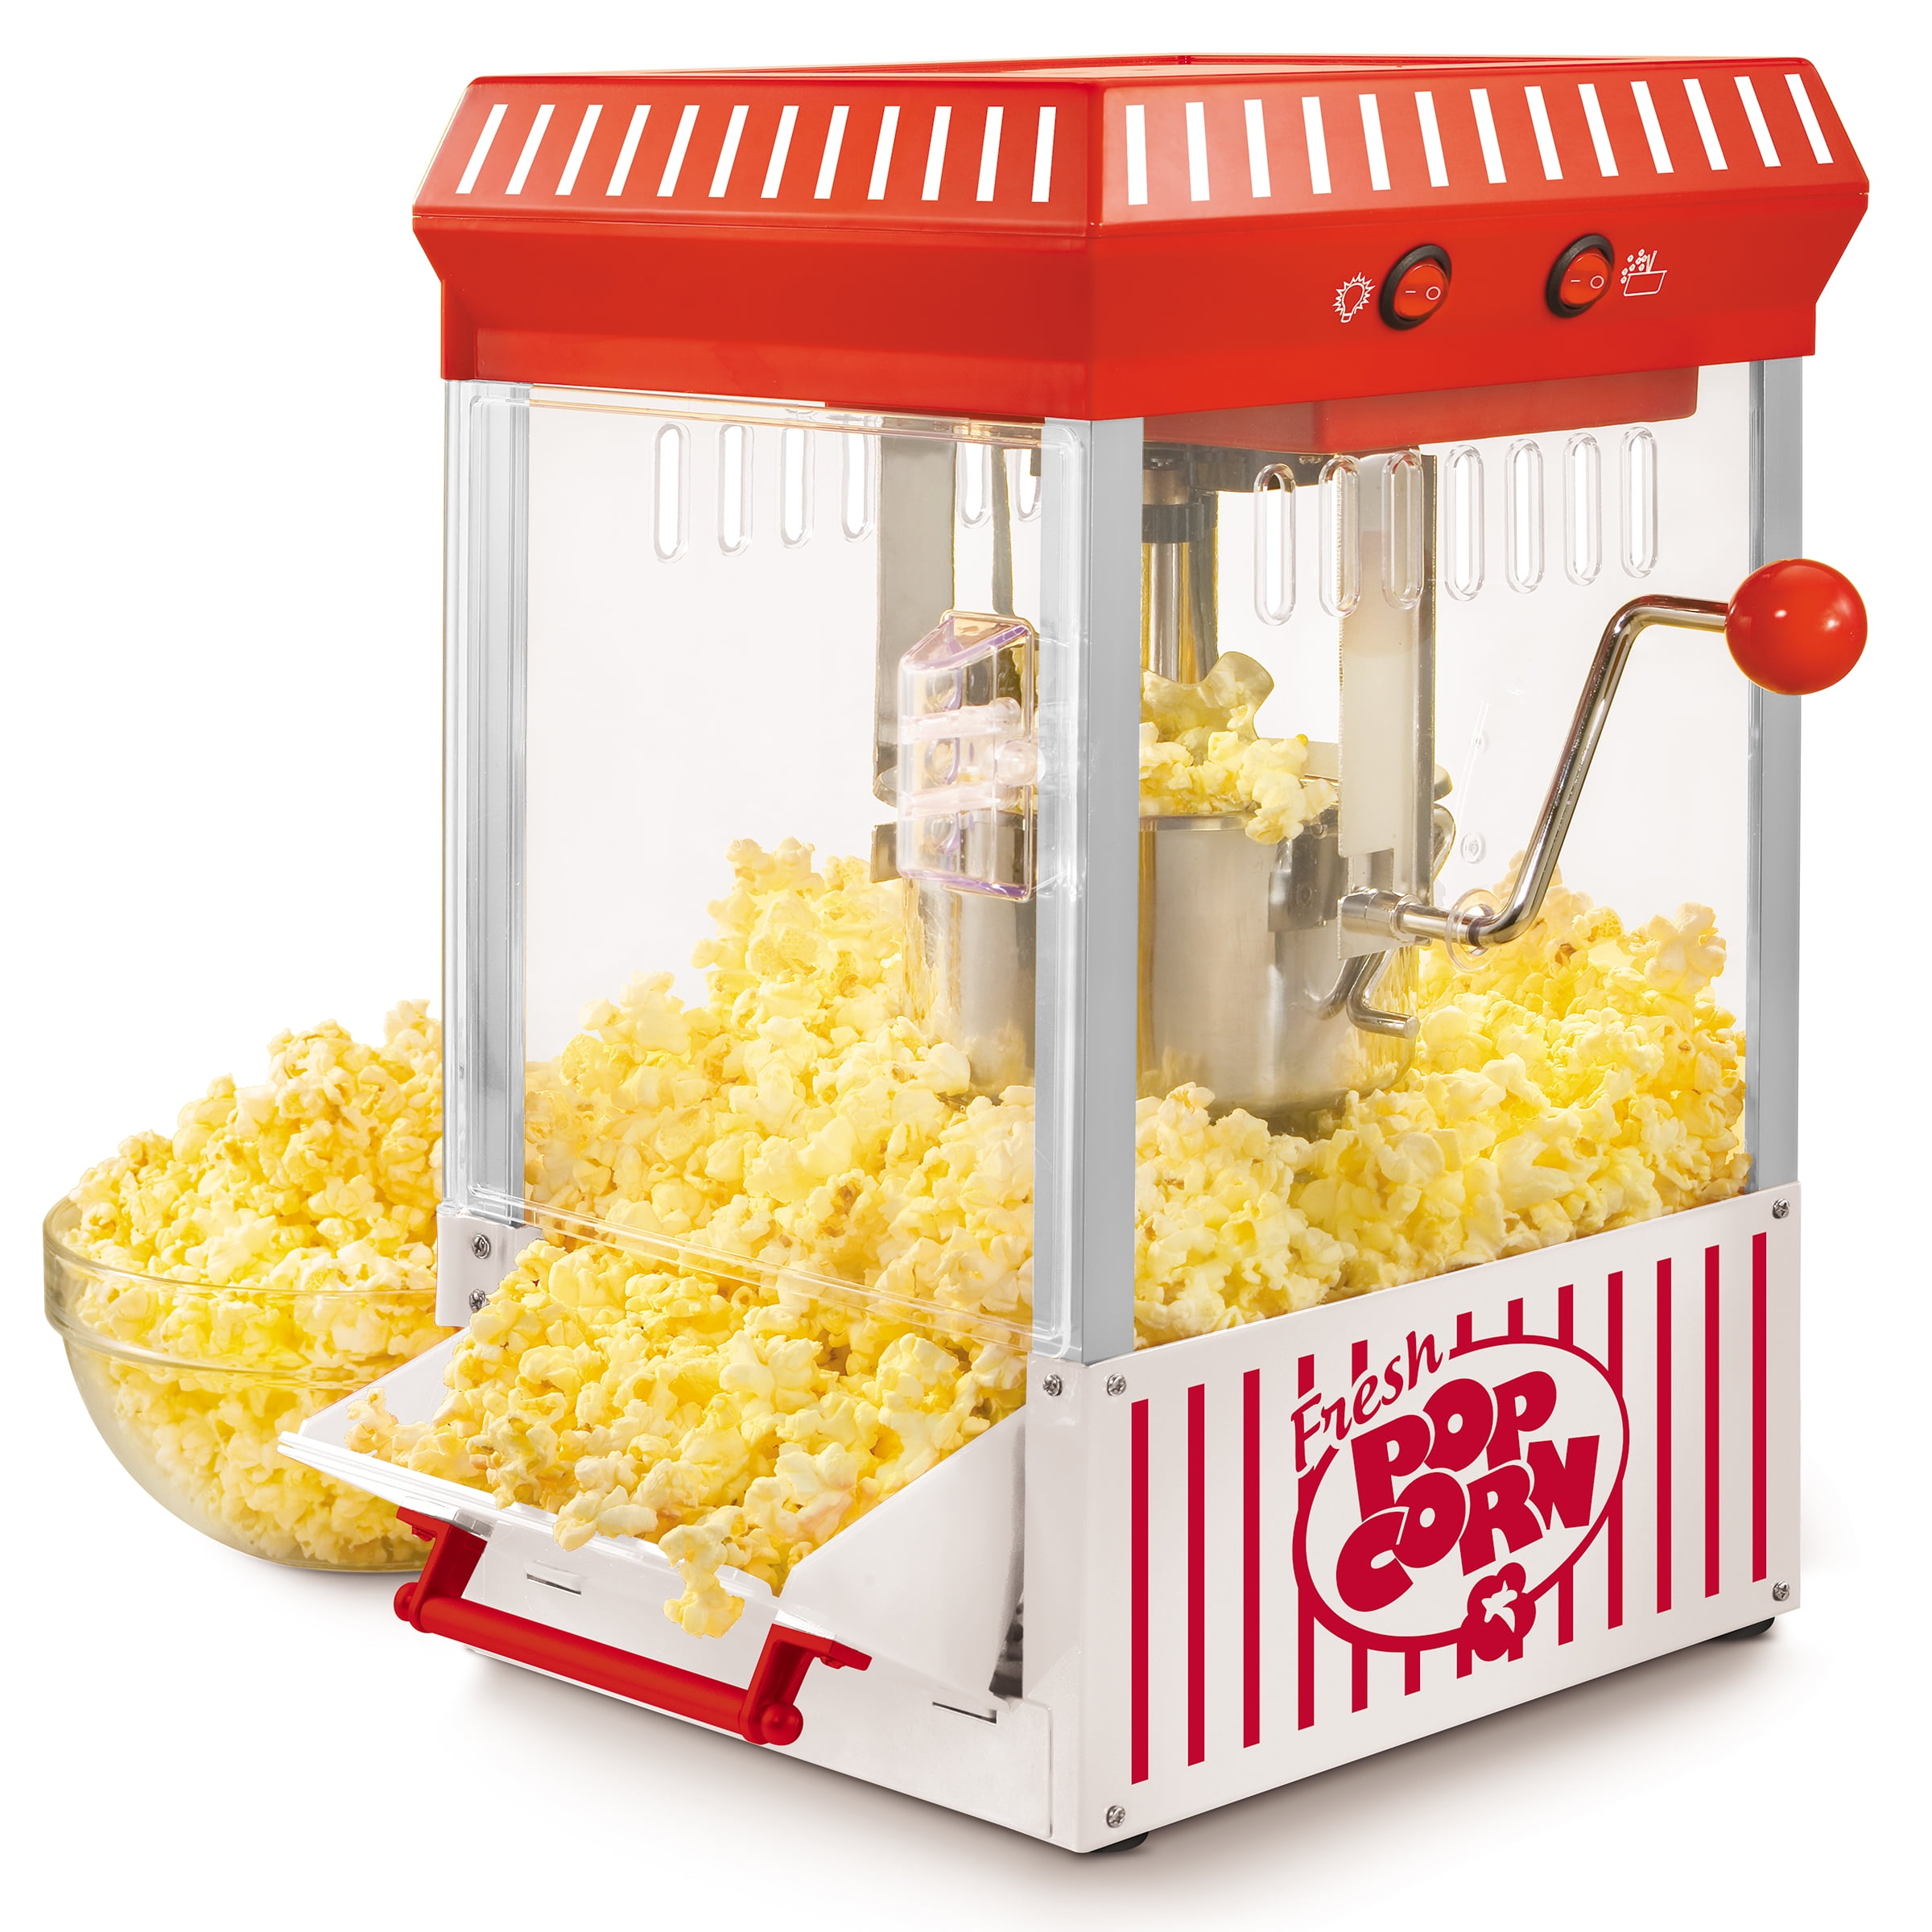 Popcorn Maker Kit for Sale in Bloomington, CA - OfferUp